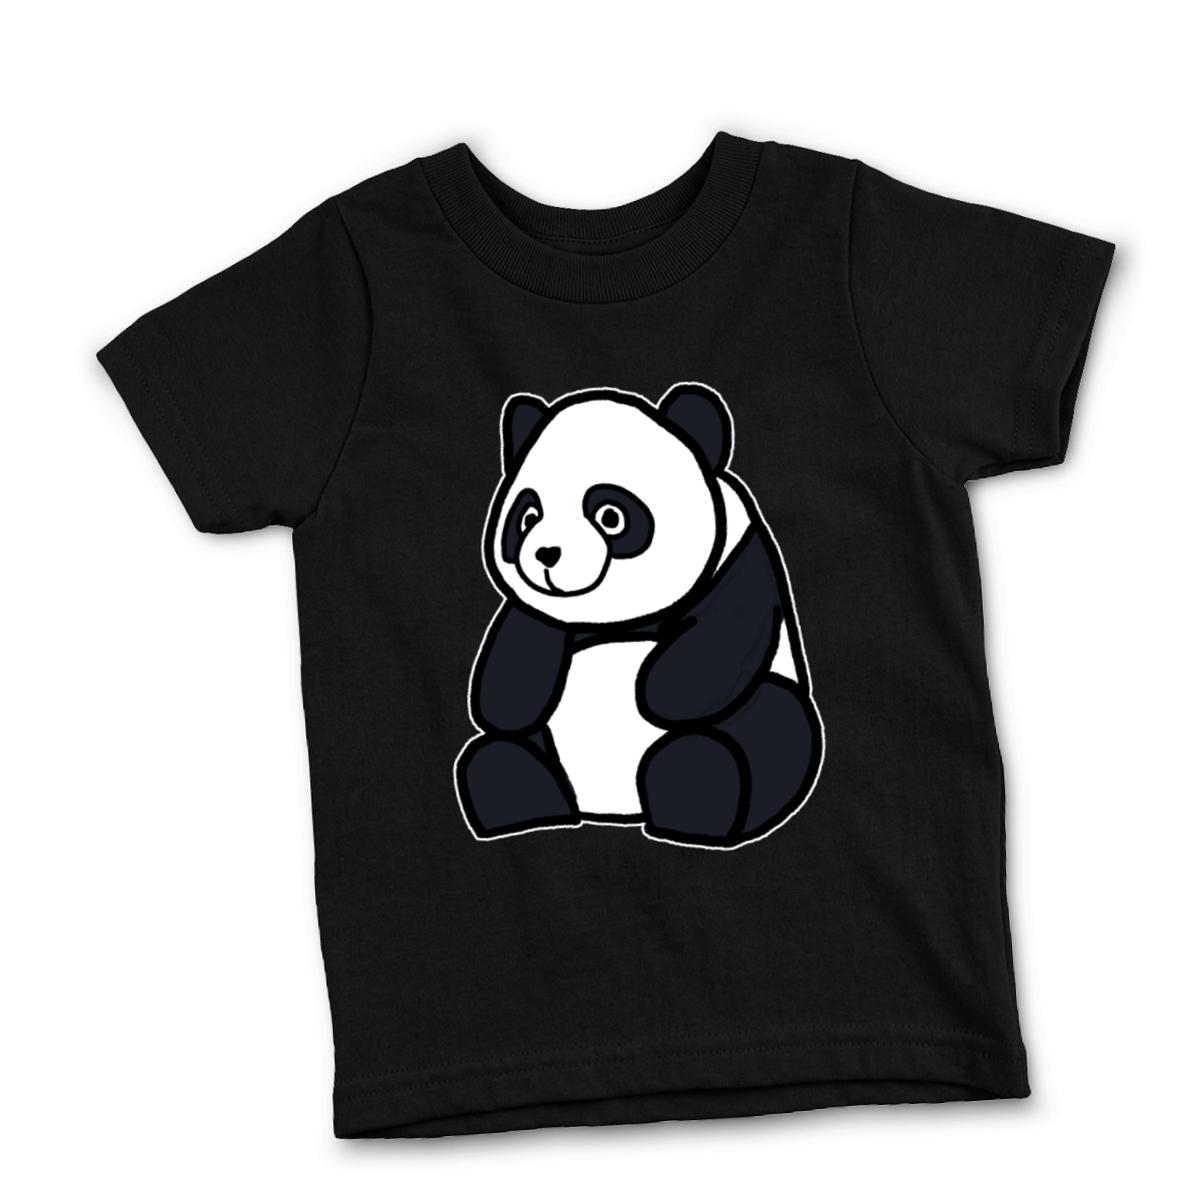 Panda Kid's Tee Small black